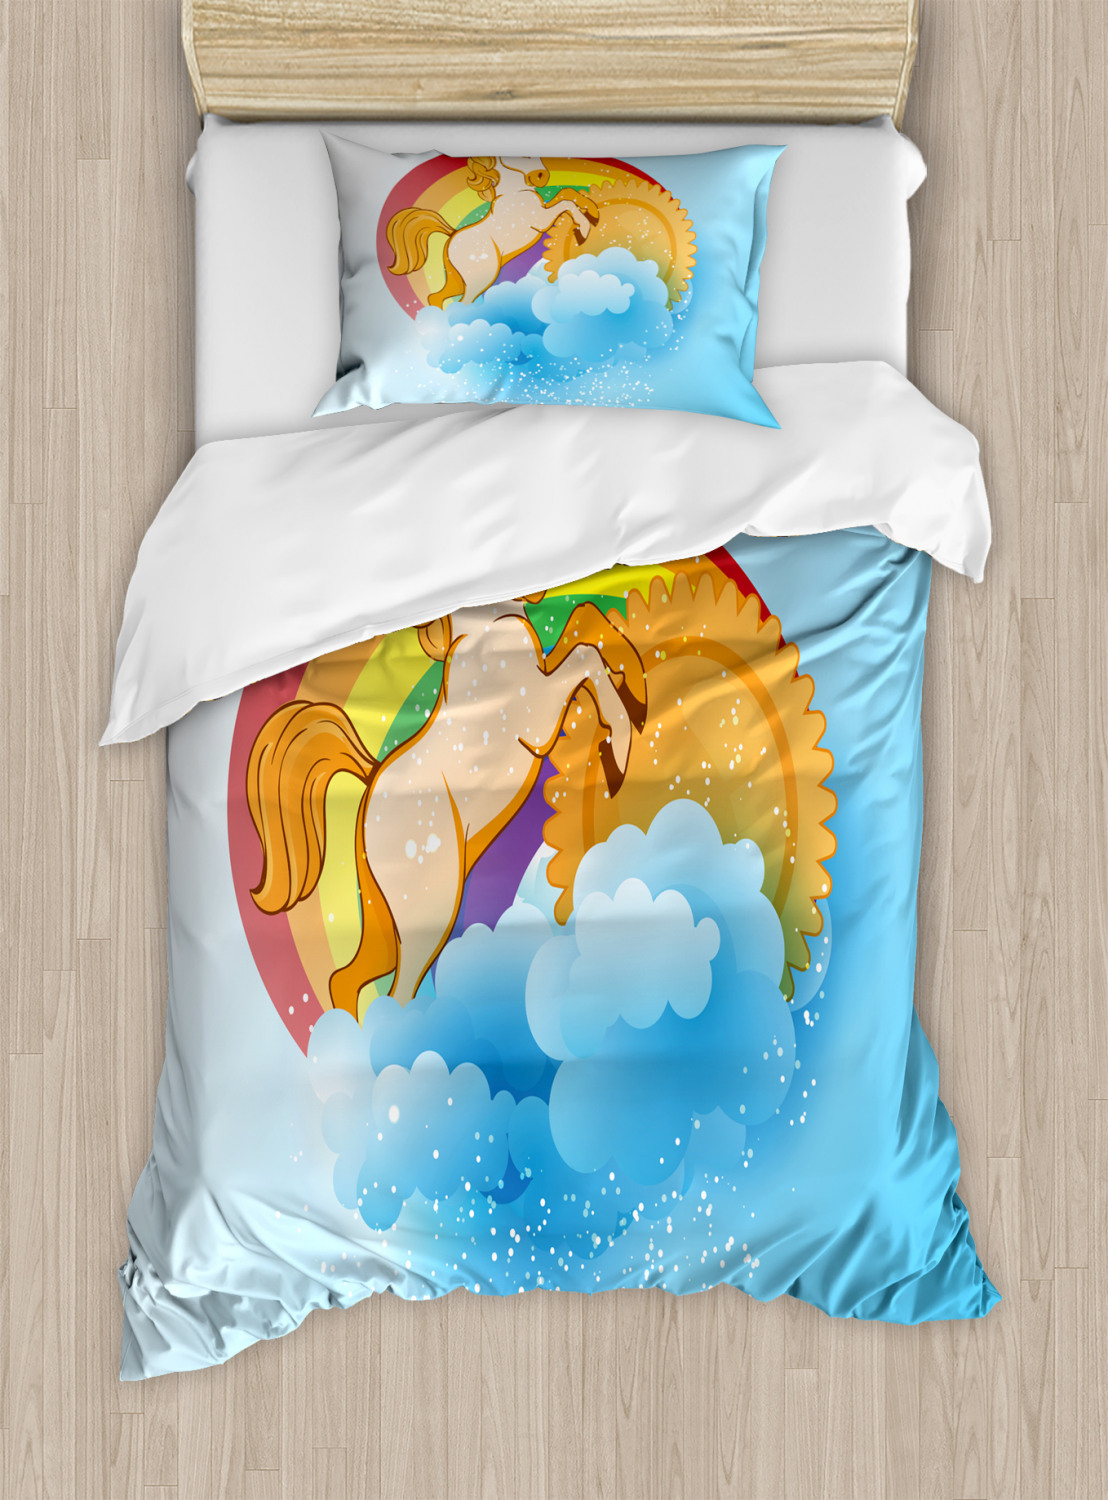 Details about   Unicorn Quilted Coverlet & Pillow Shams Set Cartoon Kids Rainbow Print 